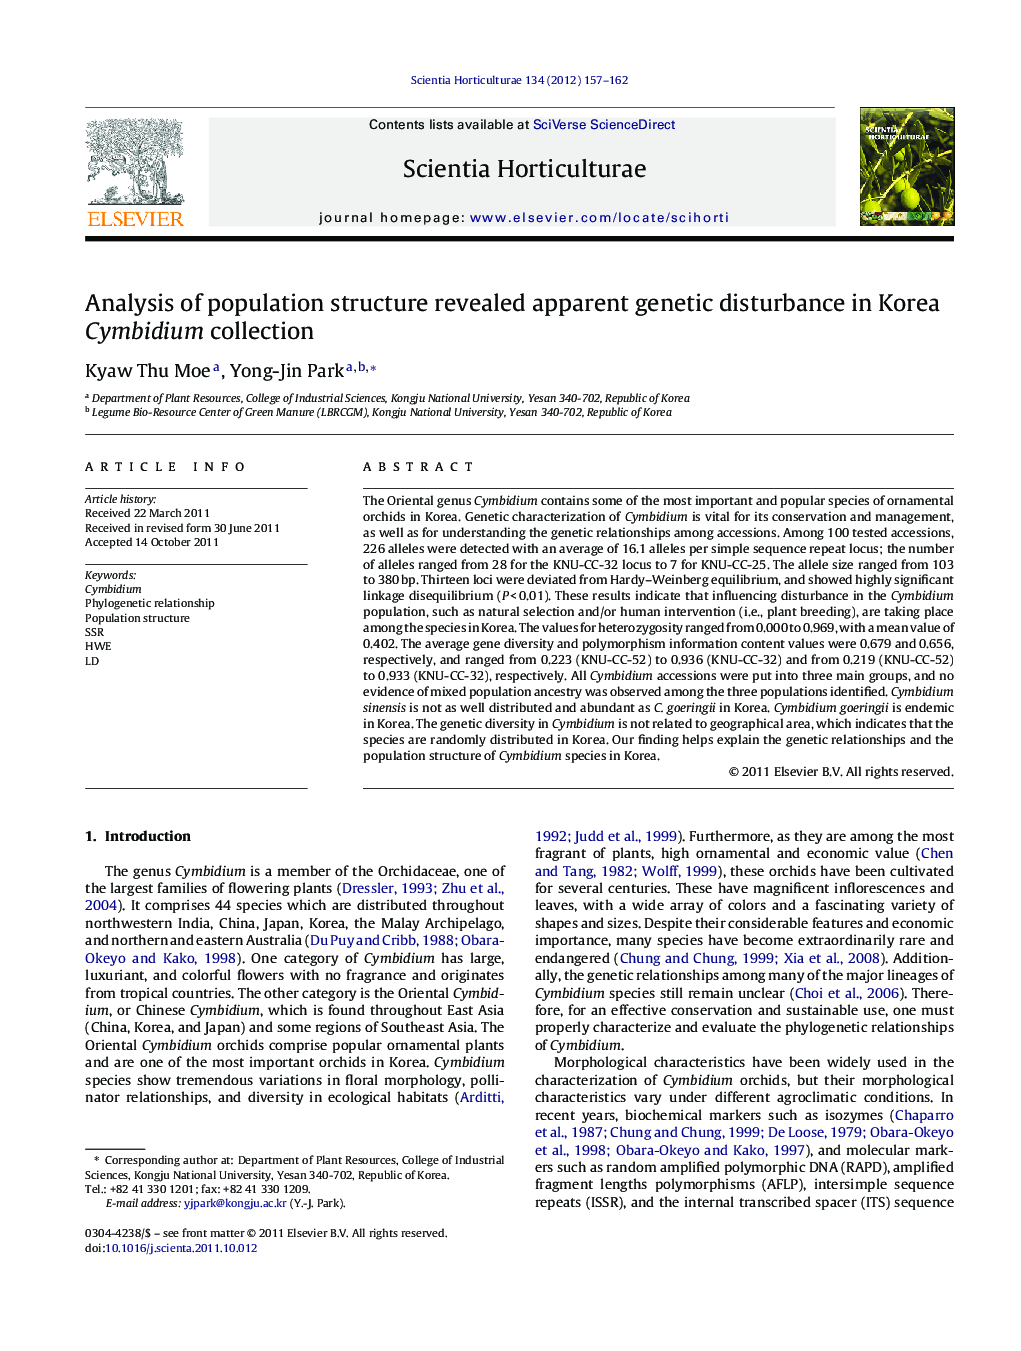 Analysis of population structure revealed apparent genetic disturbance in Korea Cymbidium collection